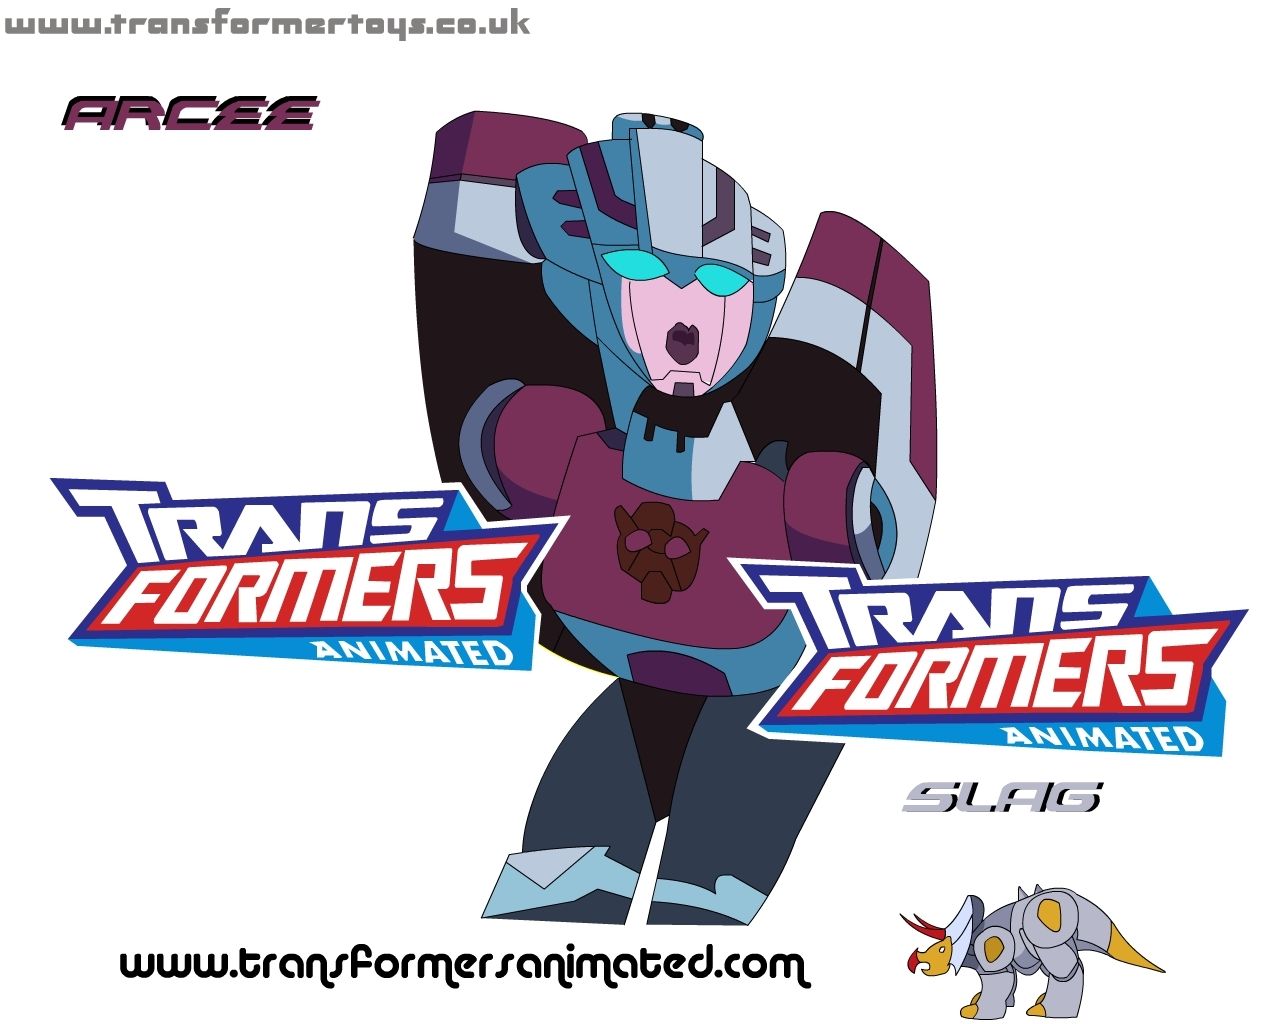 Transformers Animated Wallpaper At TransformersAnimated.com